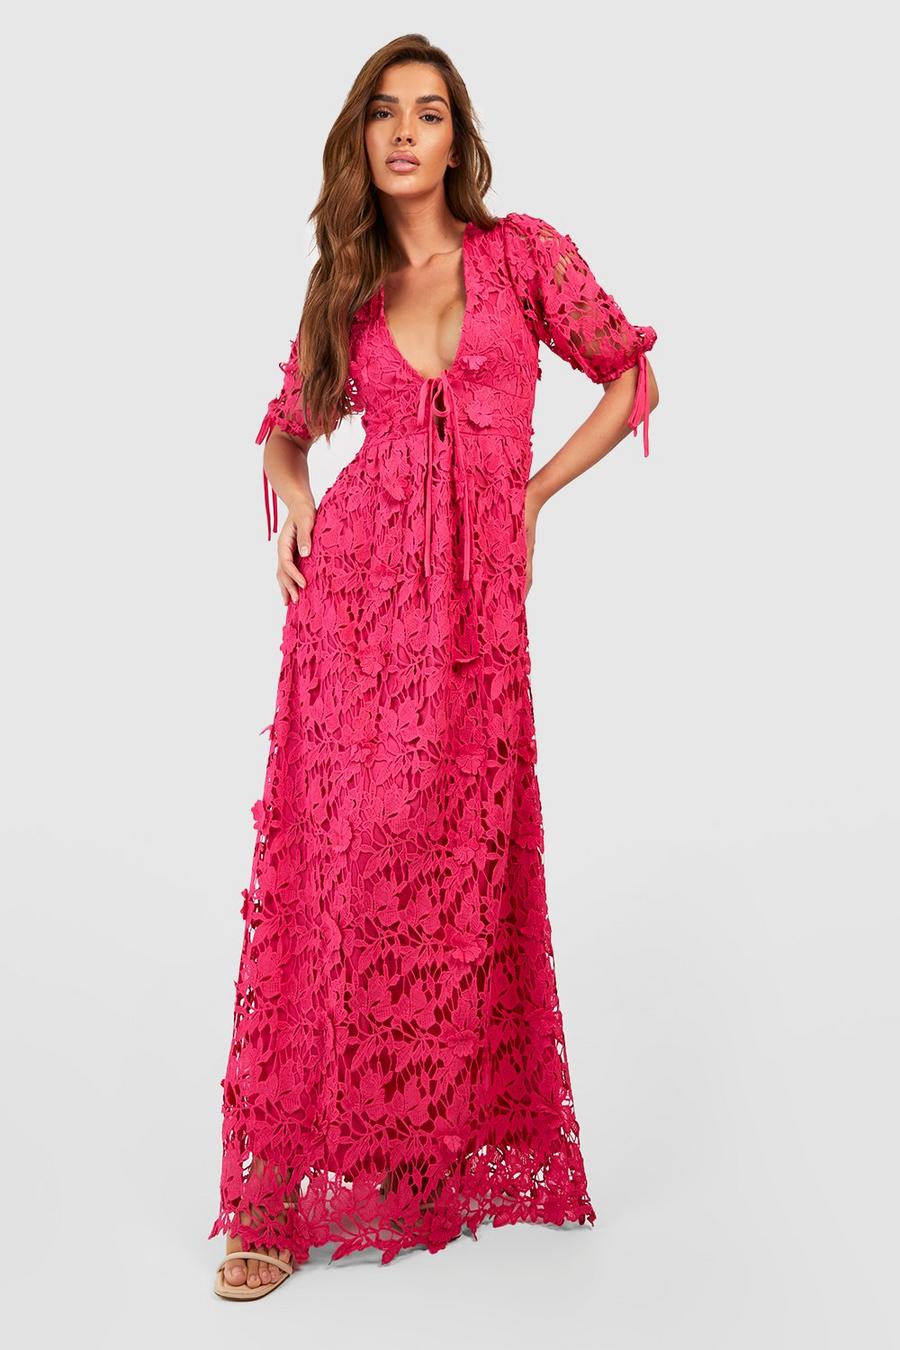 Robe longue dos nu en dentelle premium, Hot pink rose